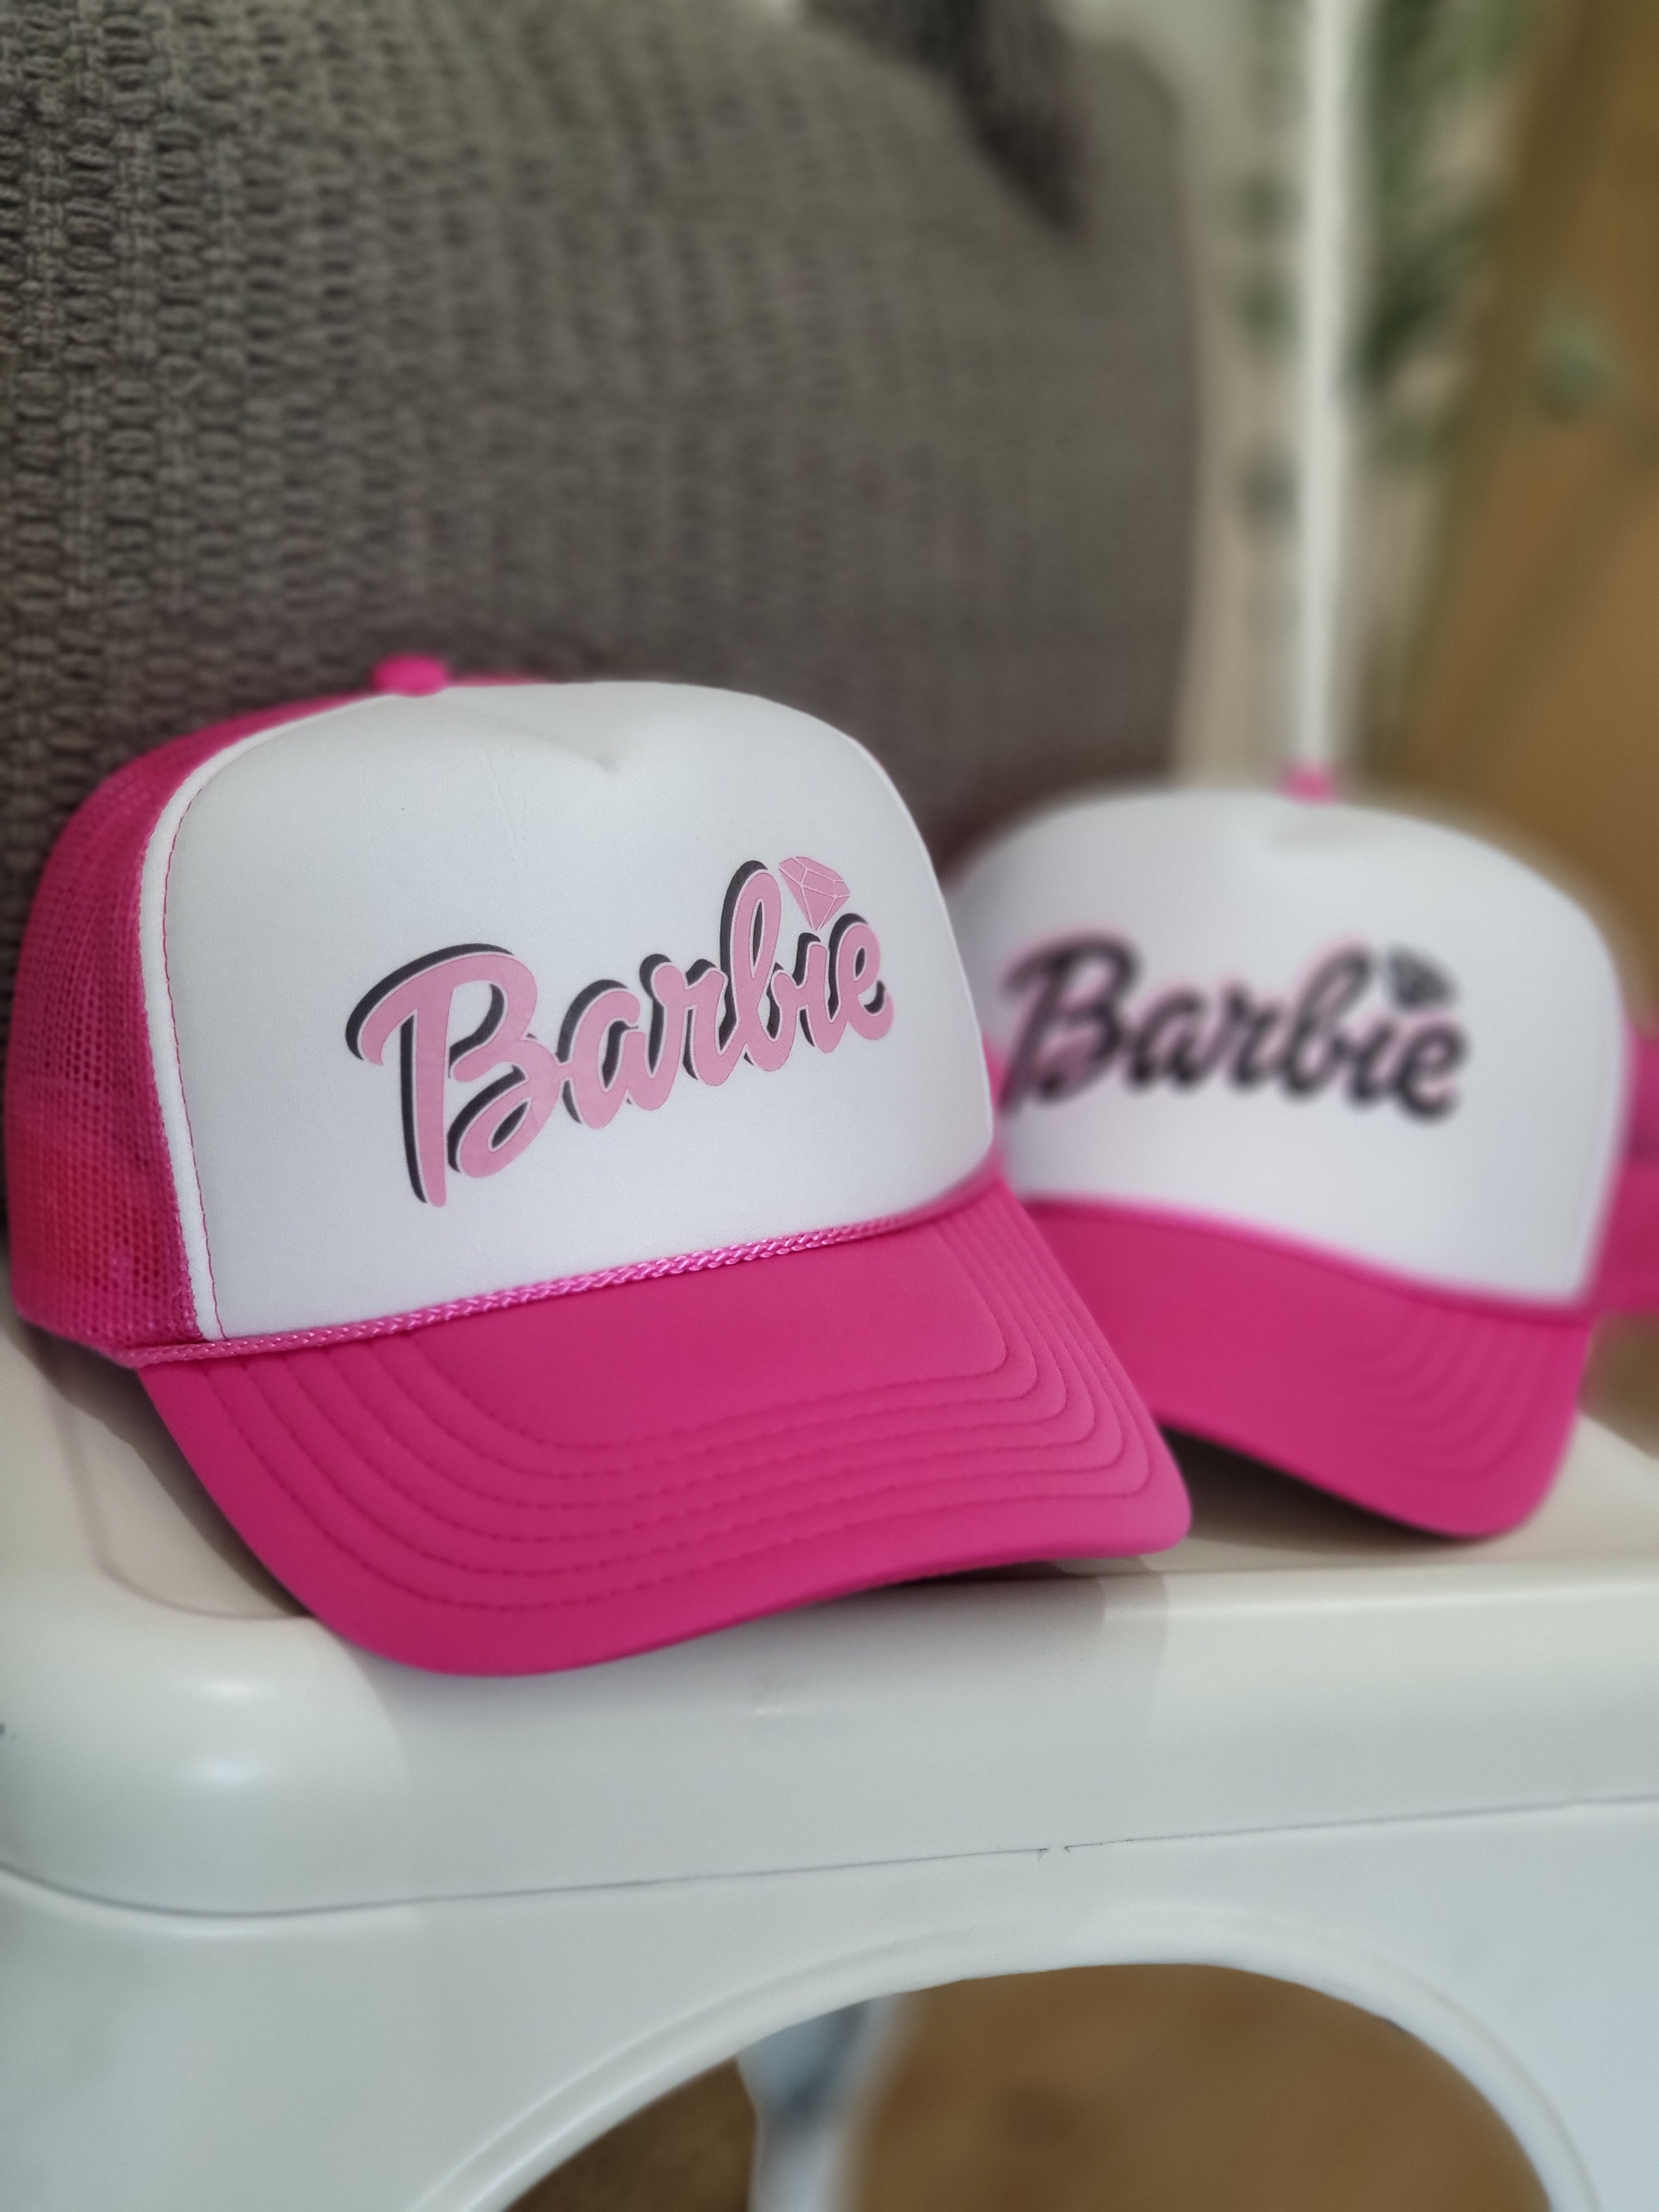 Barbie Trucker Cap